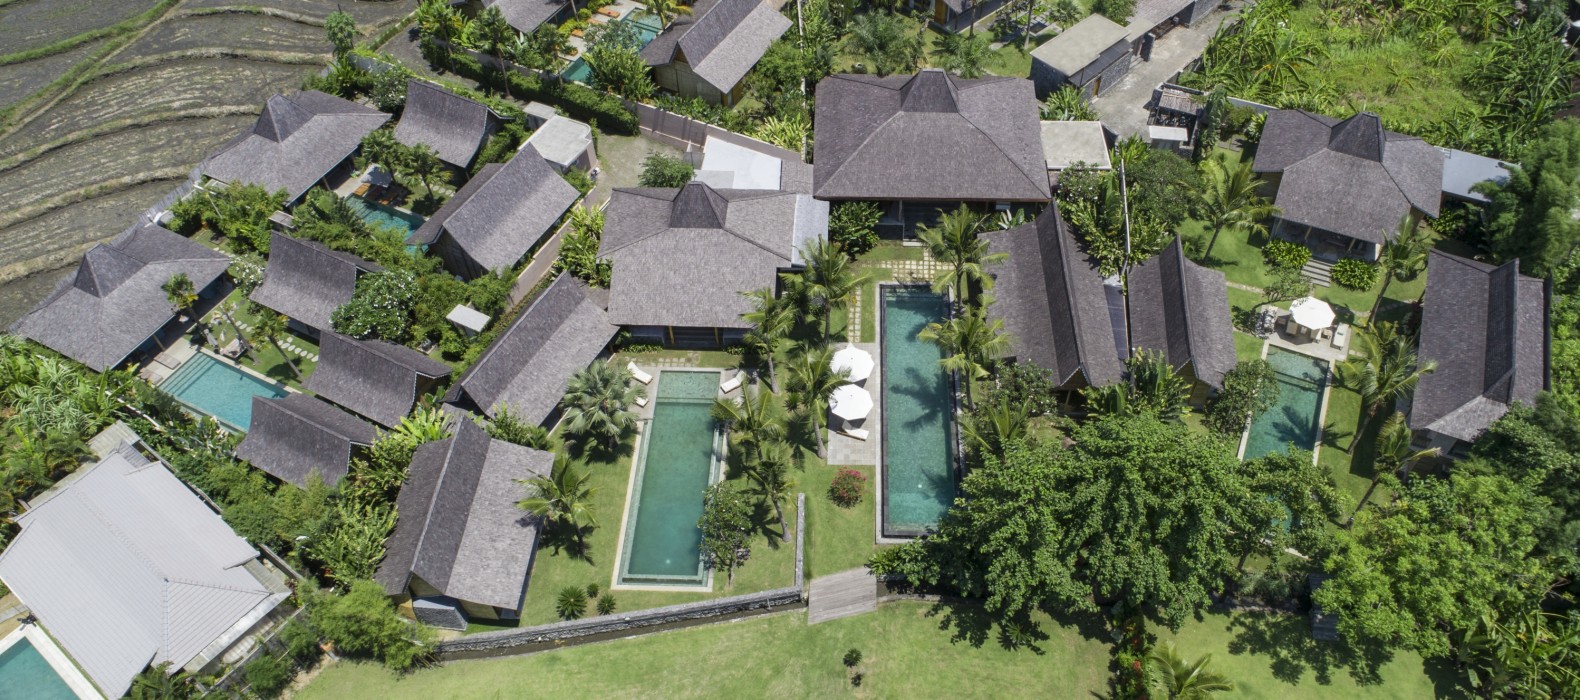 Exterior view of Villa Manoa Estate in Bali